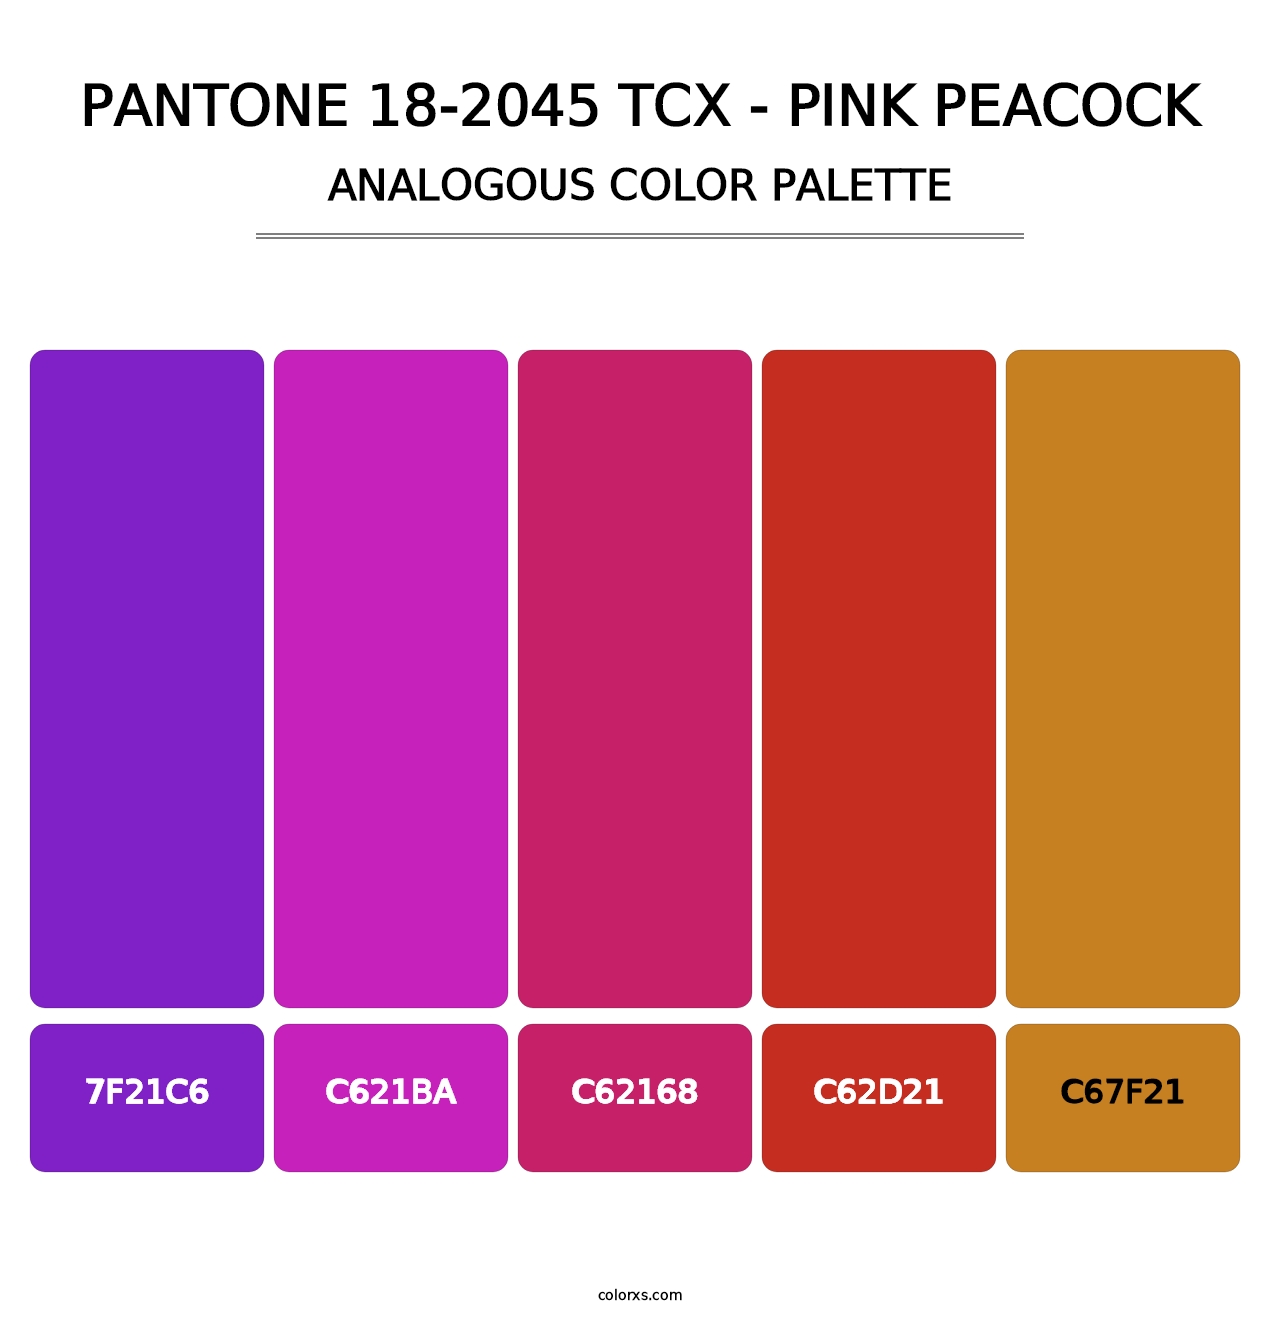 PANTONE 18-2045 TCX - Pink Peacock - Analogous Color Palette